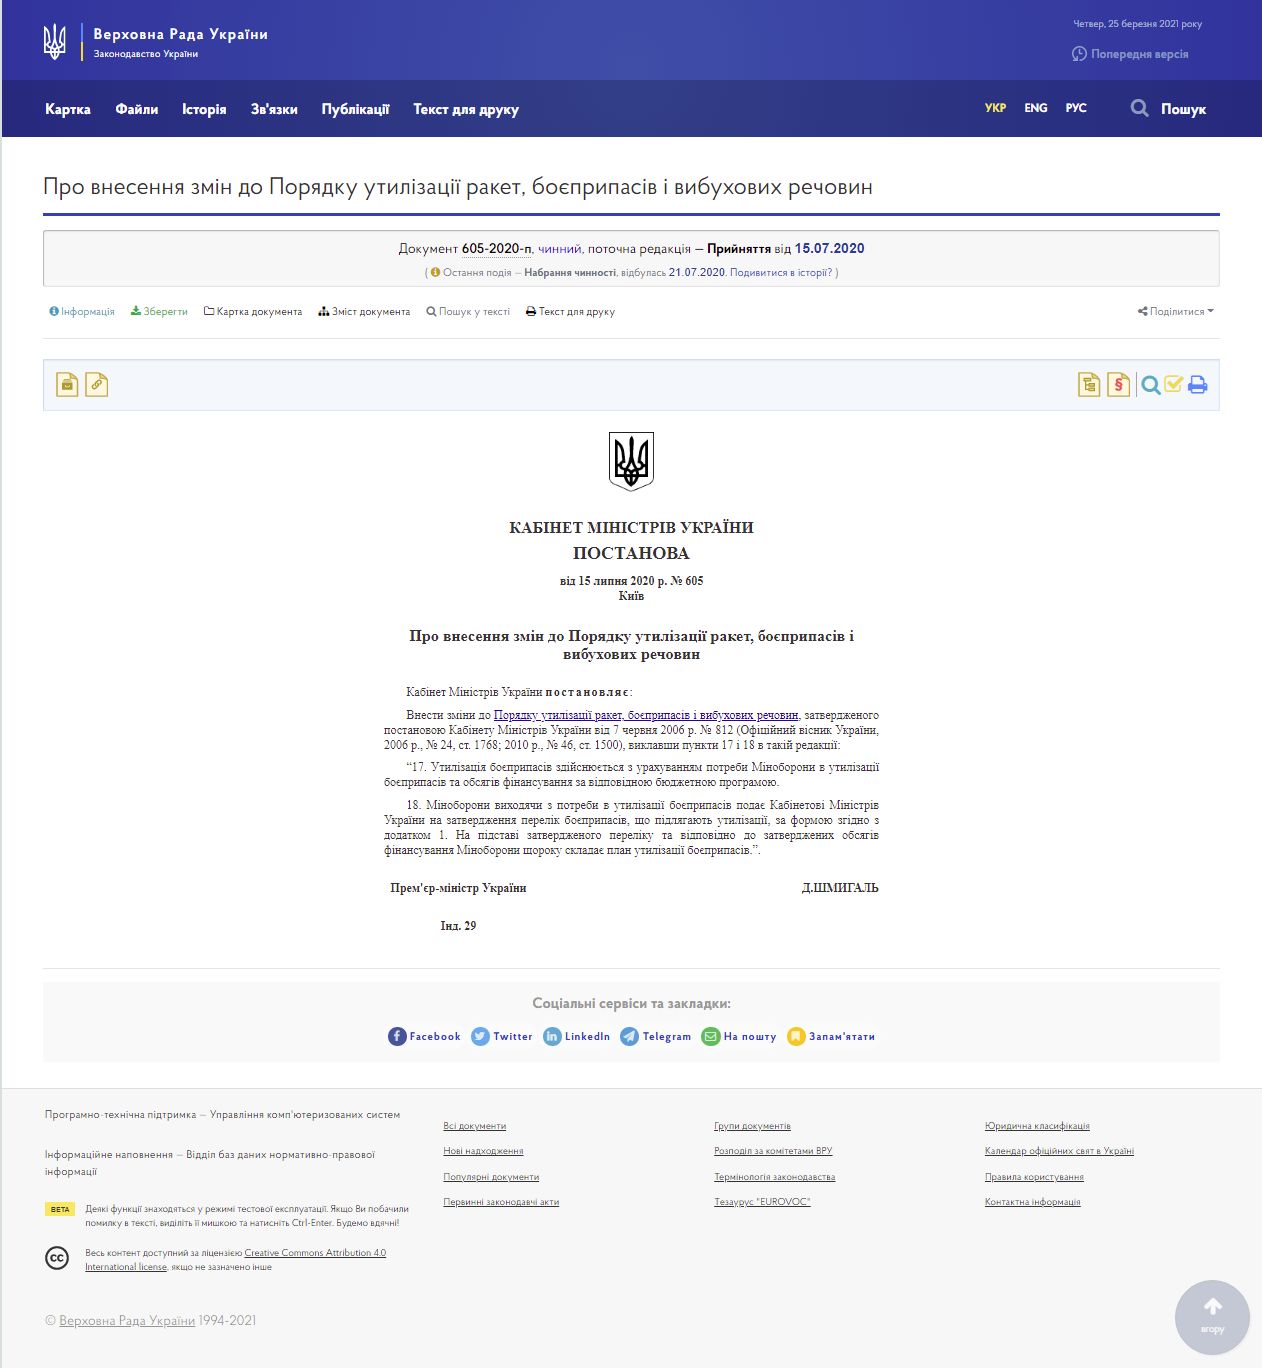 https://zakon.rada.gov.ua/laws/show/605-2020-%D0%BF#Text